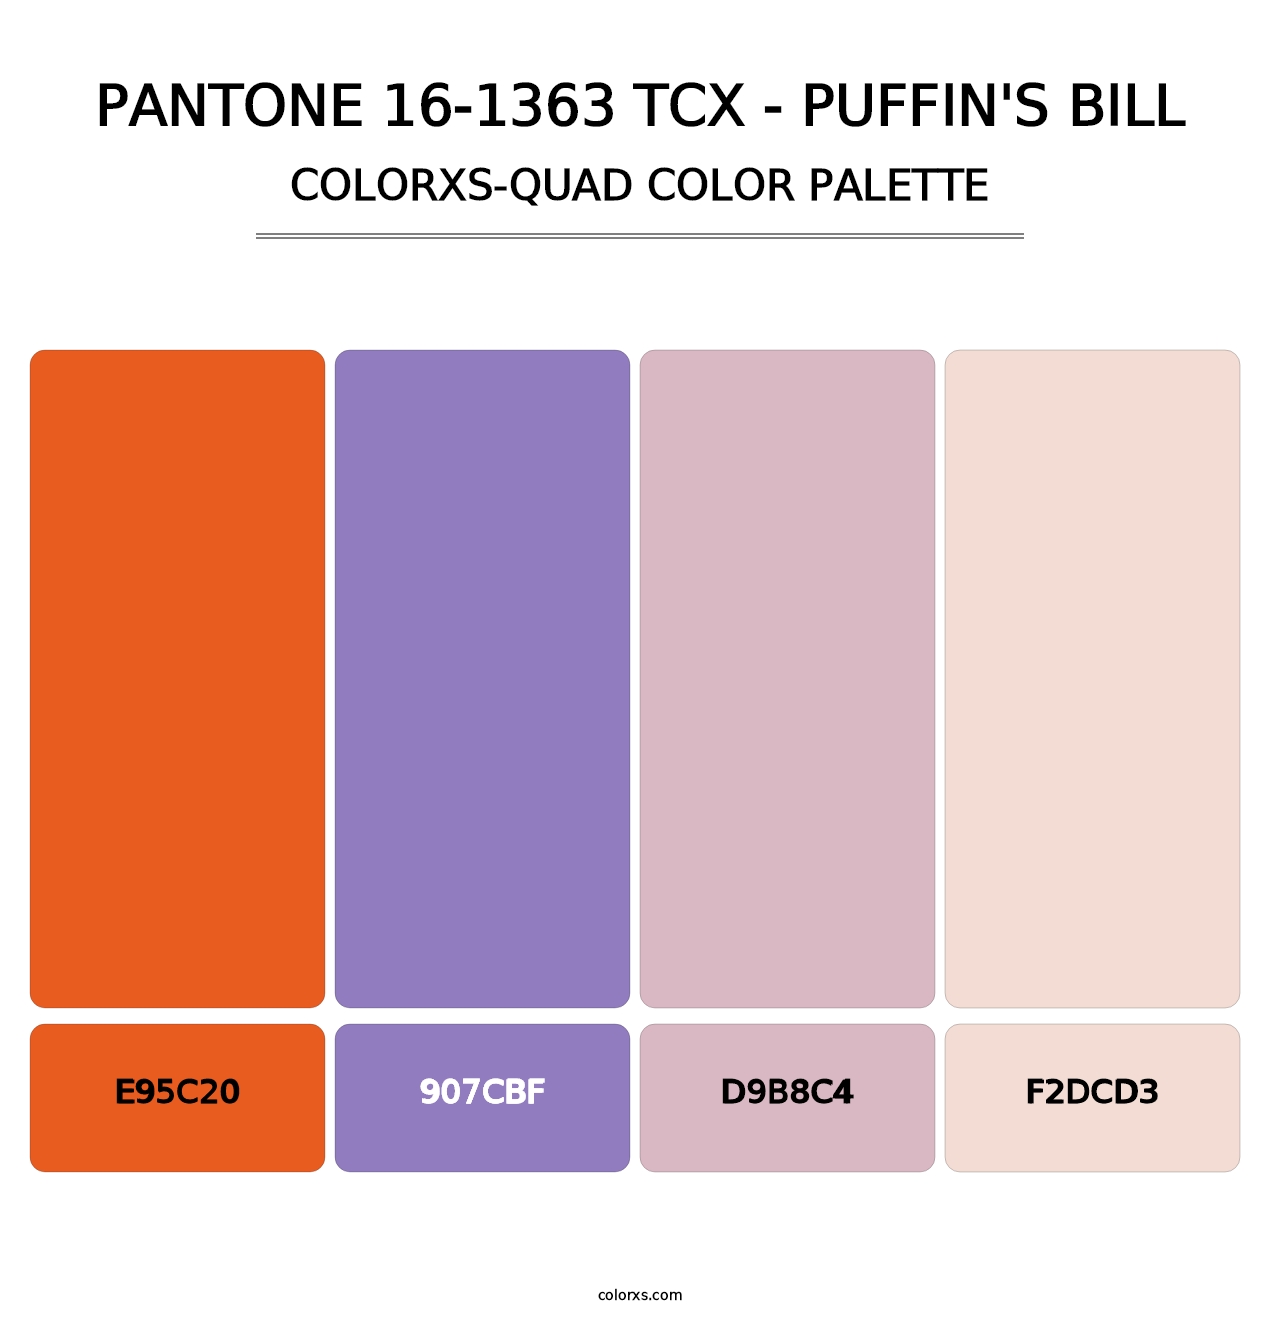 PANTONE 16-1363 TCX - Puffin's Bill - Colorxs Quad Palette